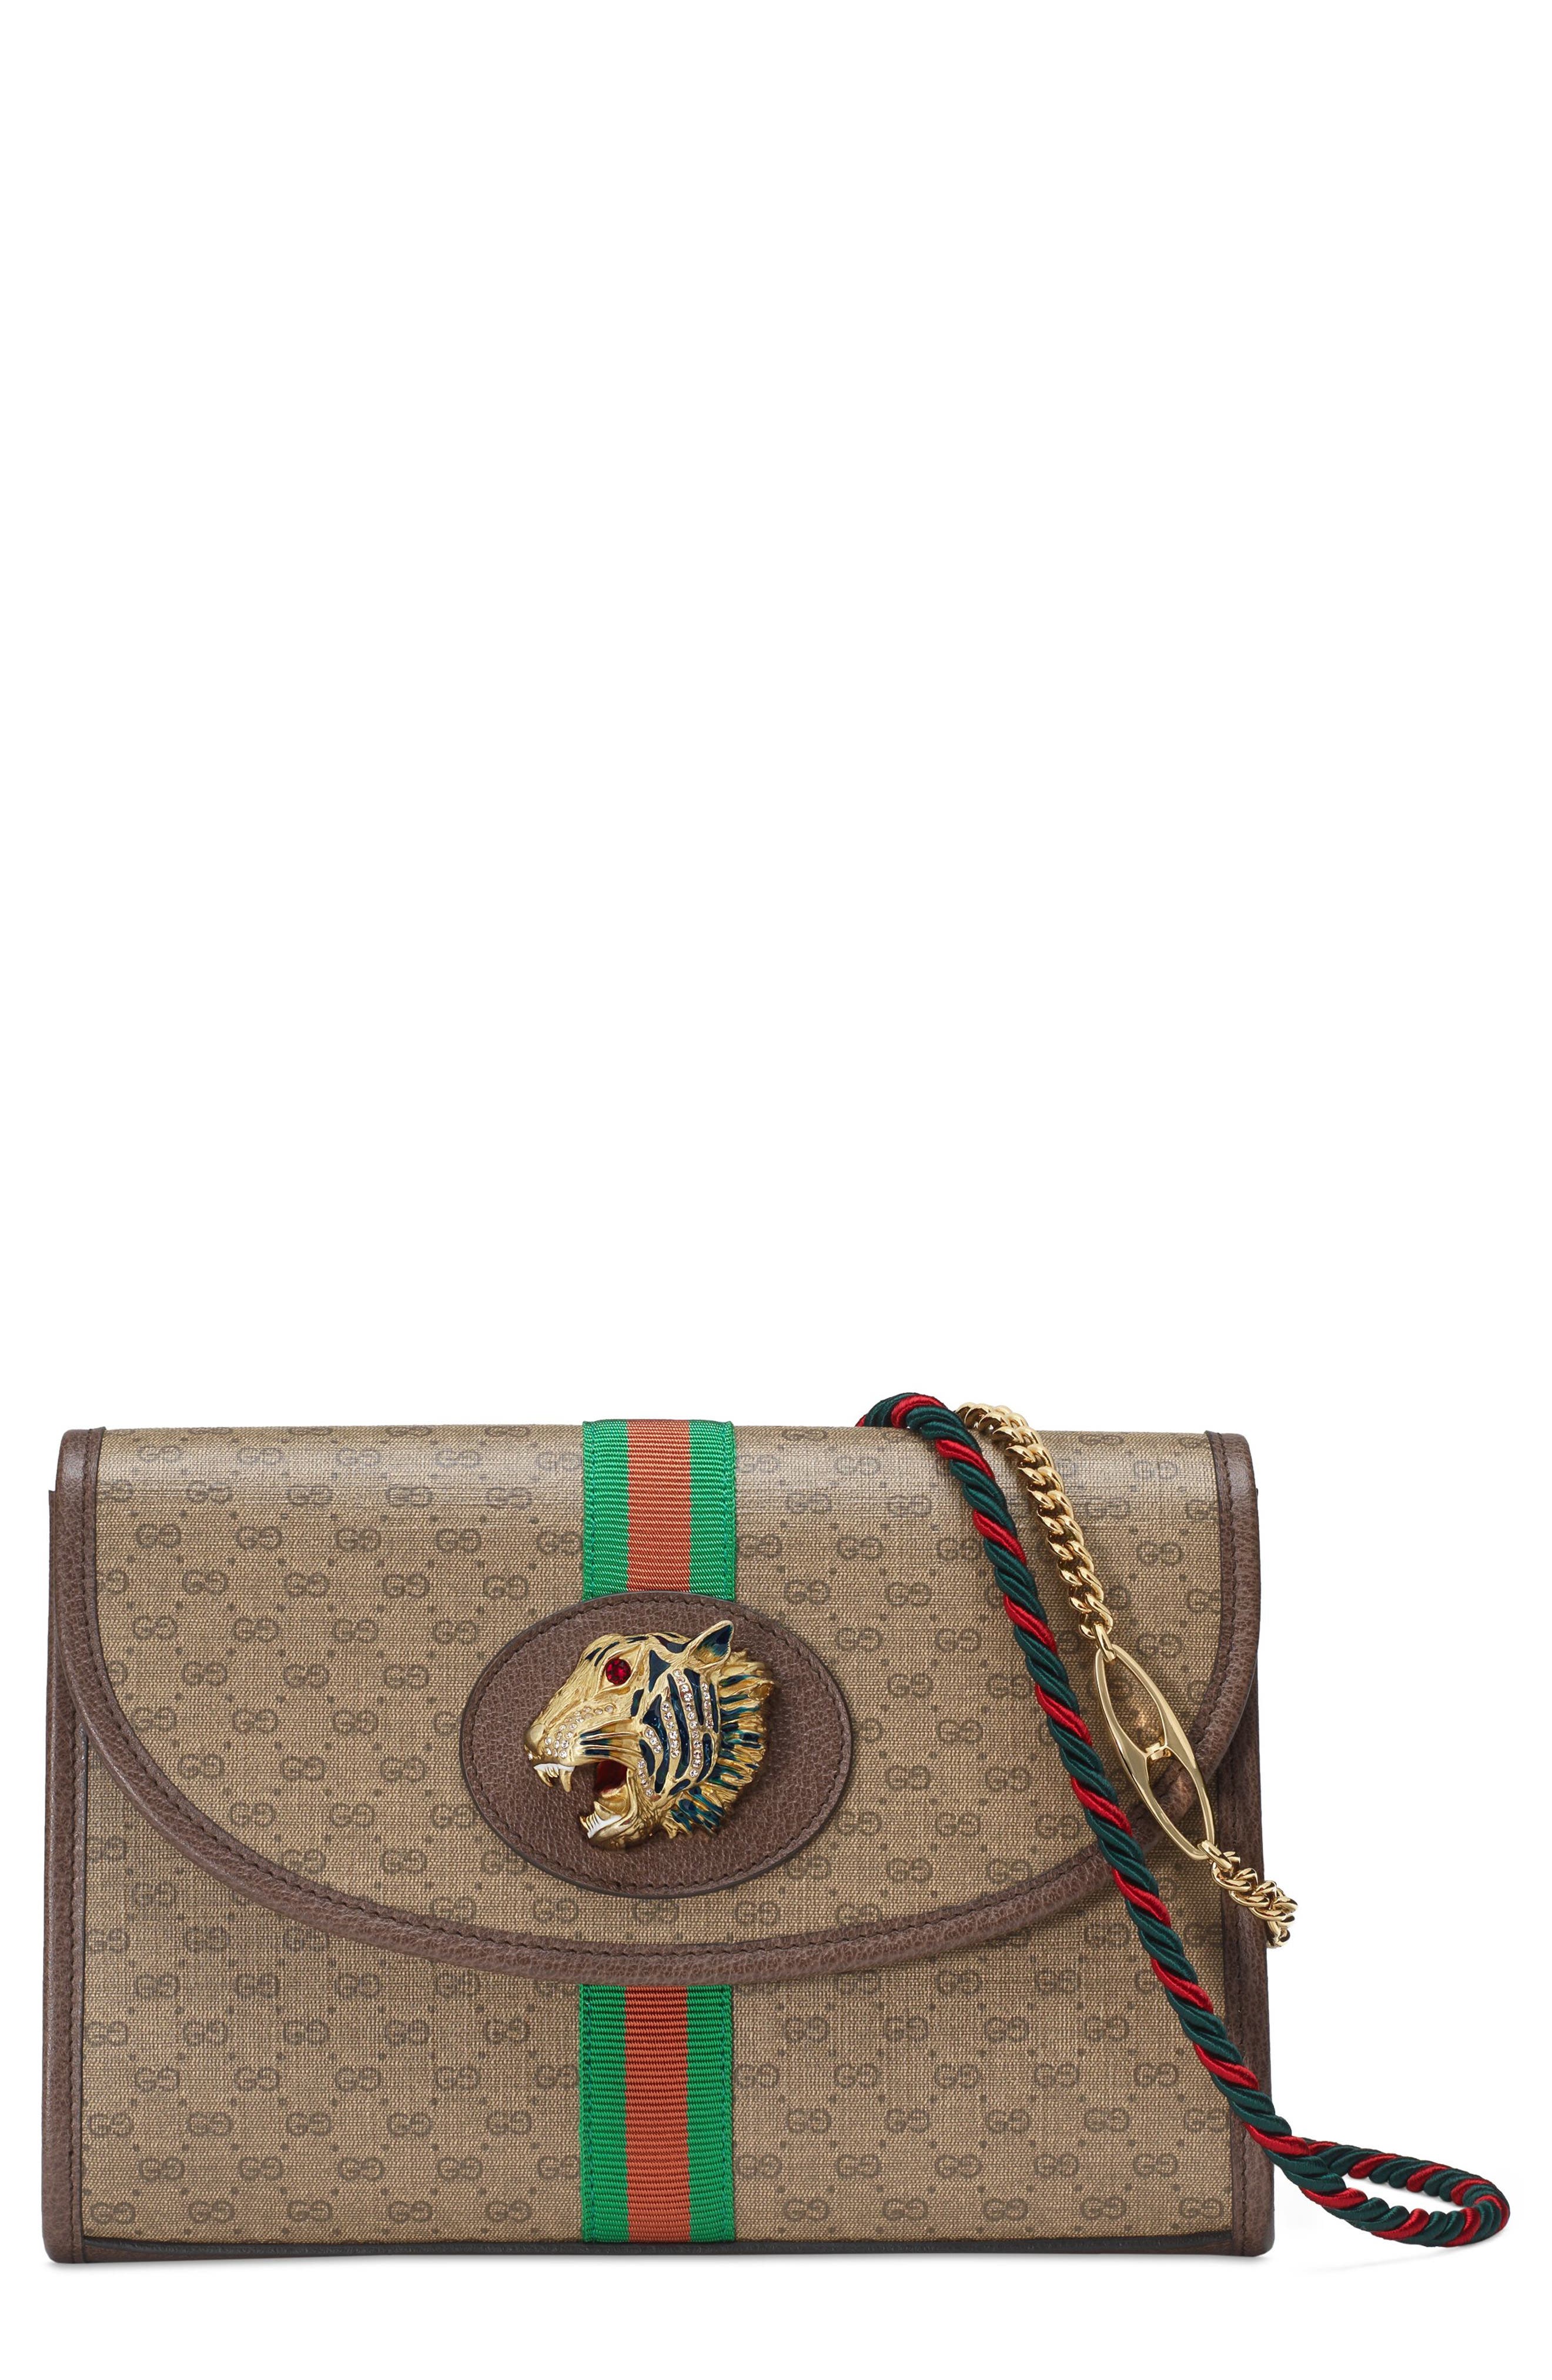 Gucci Supreme Canvas Shoulder Bag 